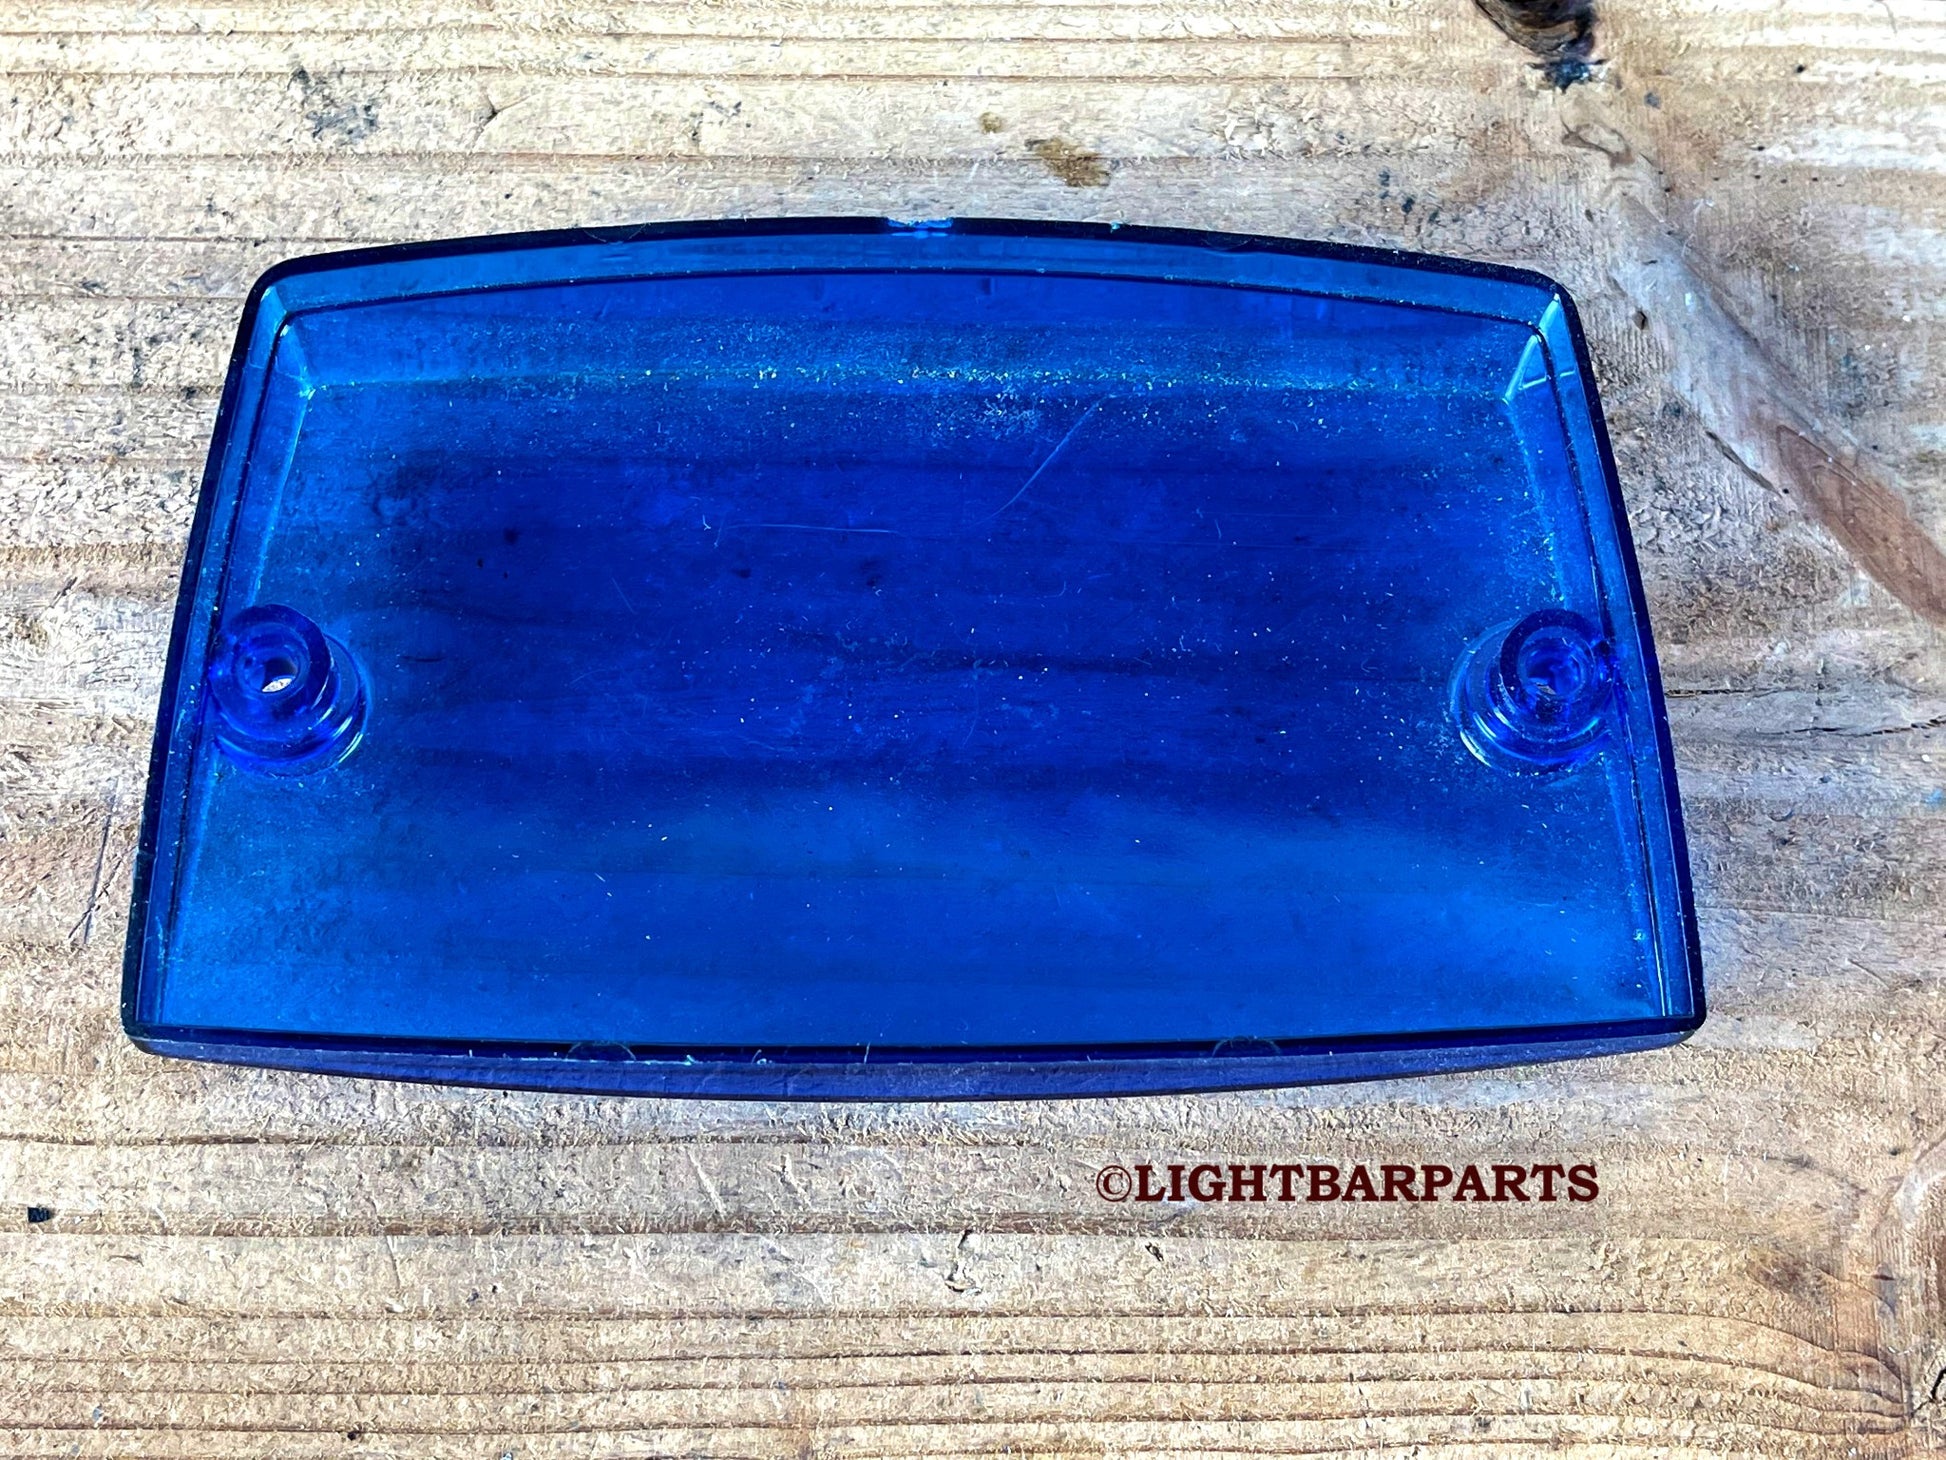 Federal Signal StreetHawk Lightbar - Original Style Blue Secondary Lens